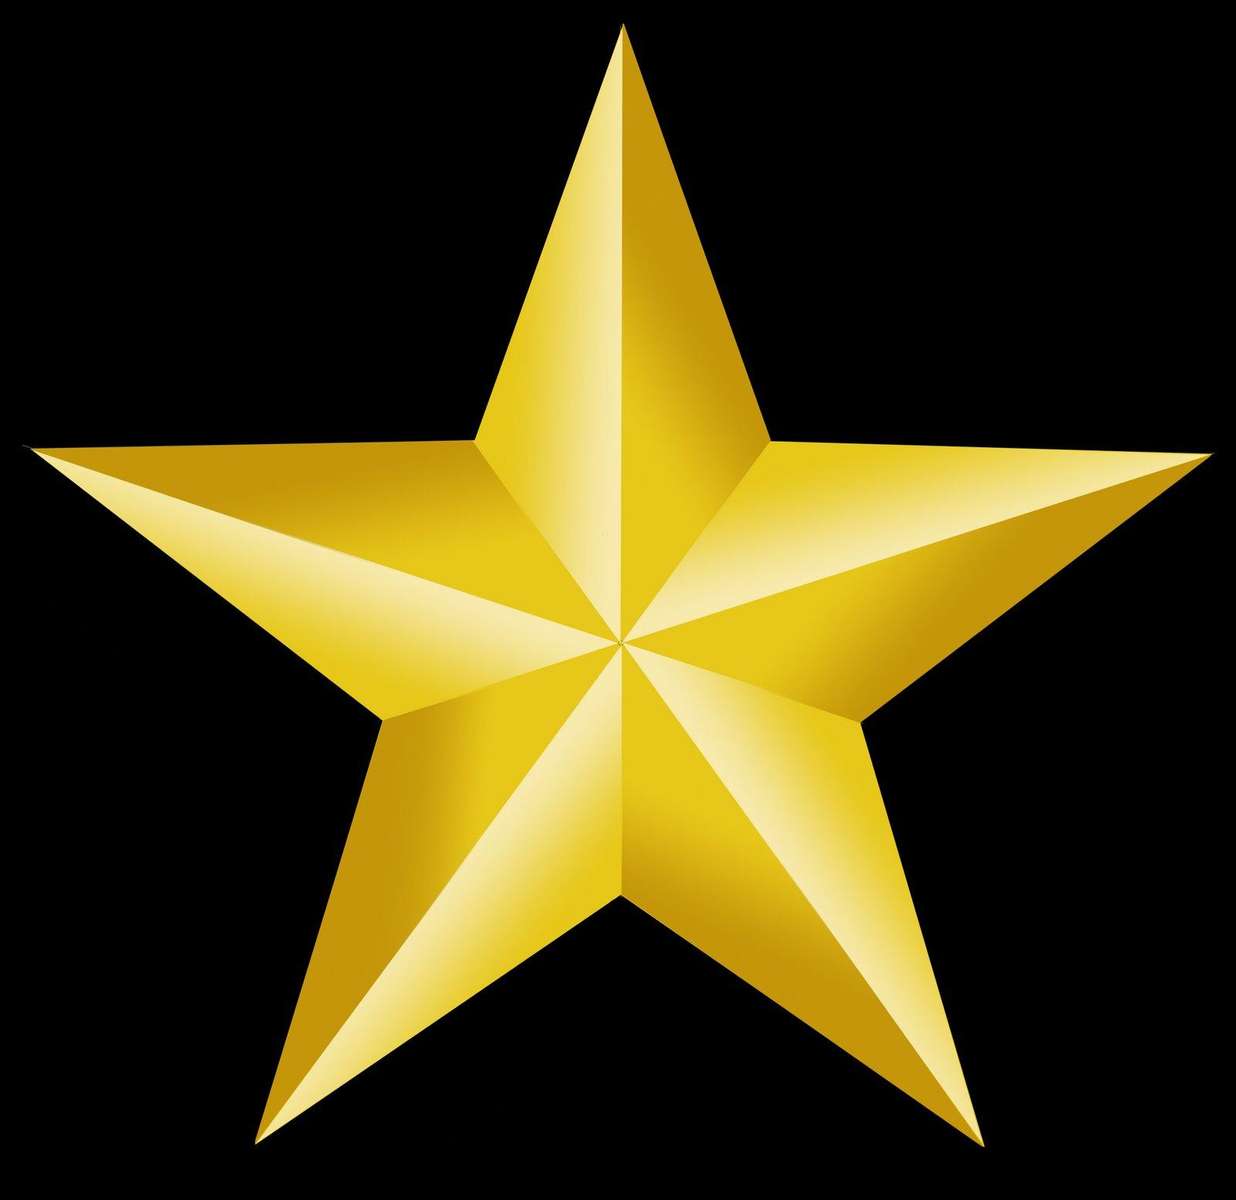 Quebra-cabeça símbolo bintang puzzle online a partir de fotografia